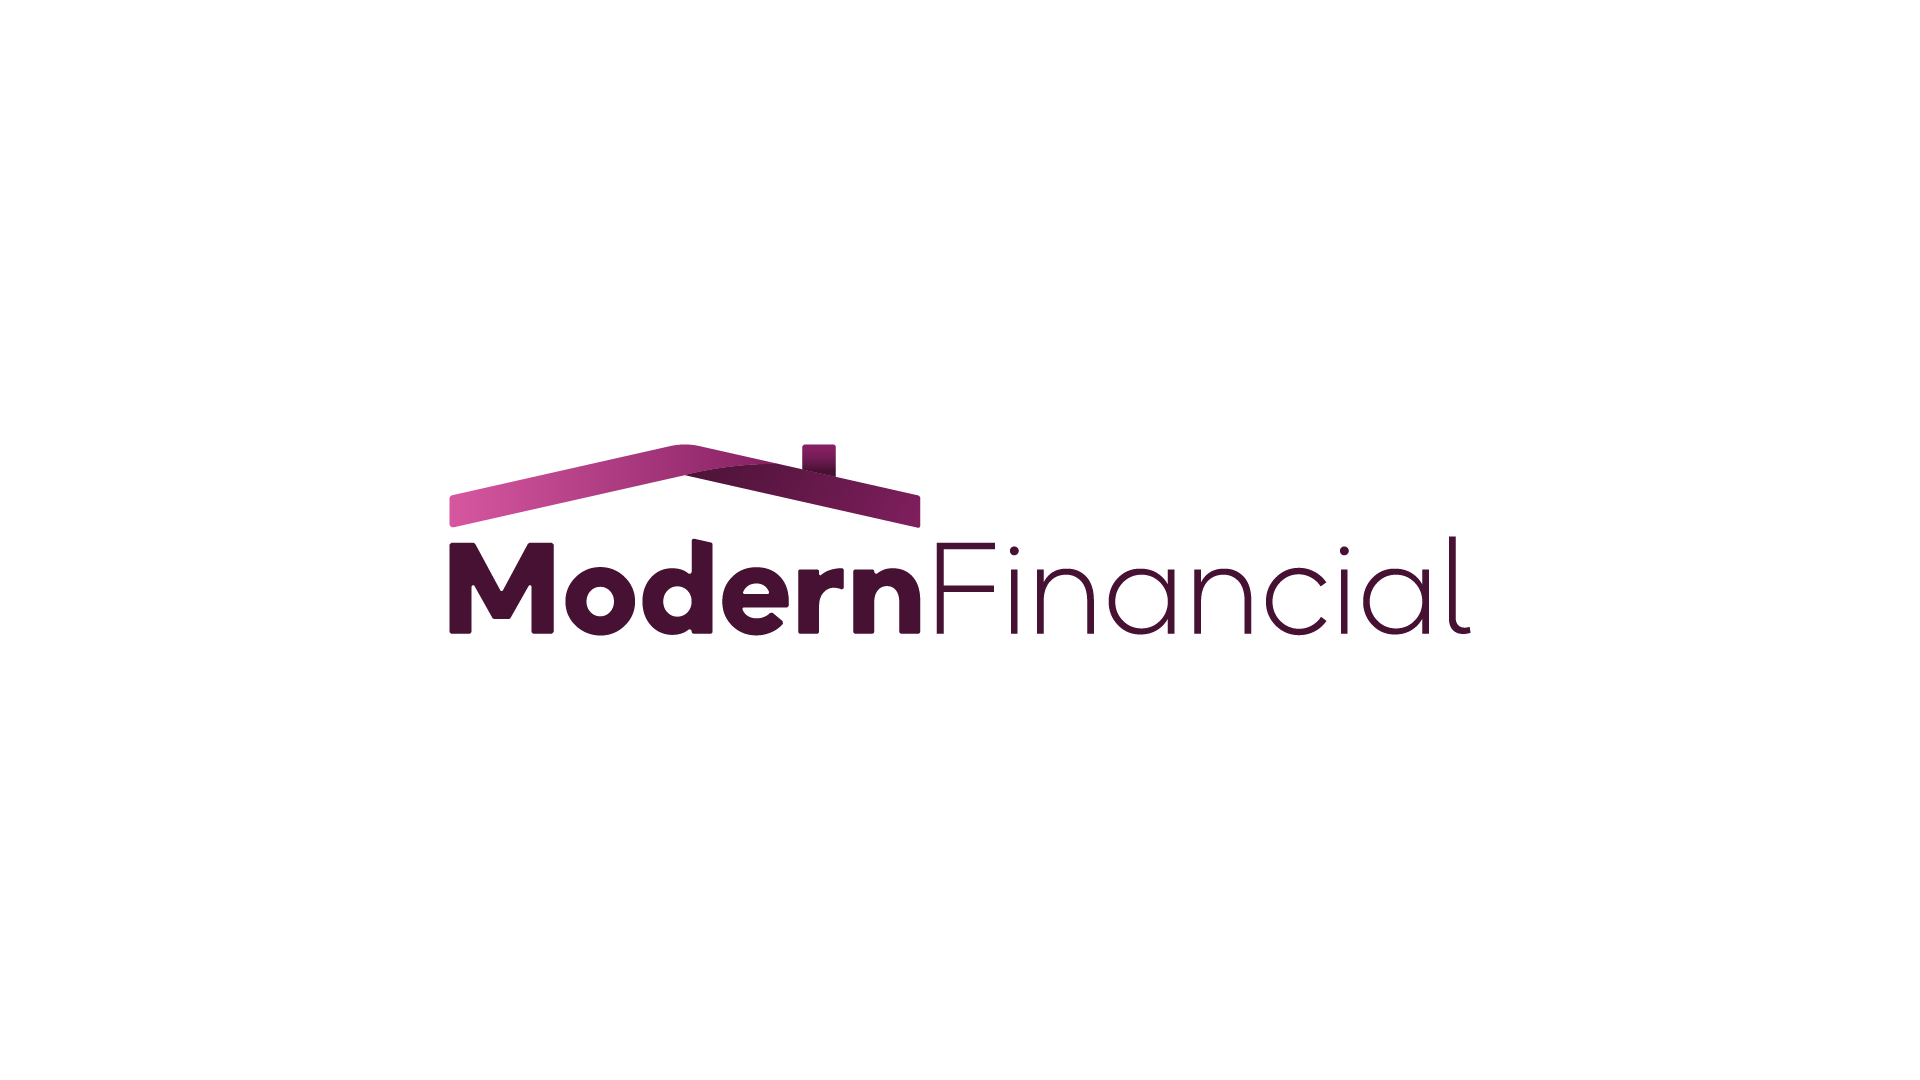 Modern Financial our work